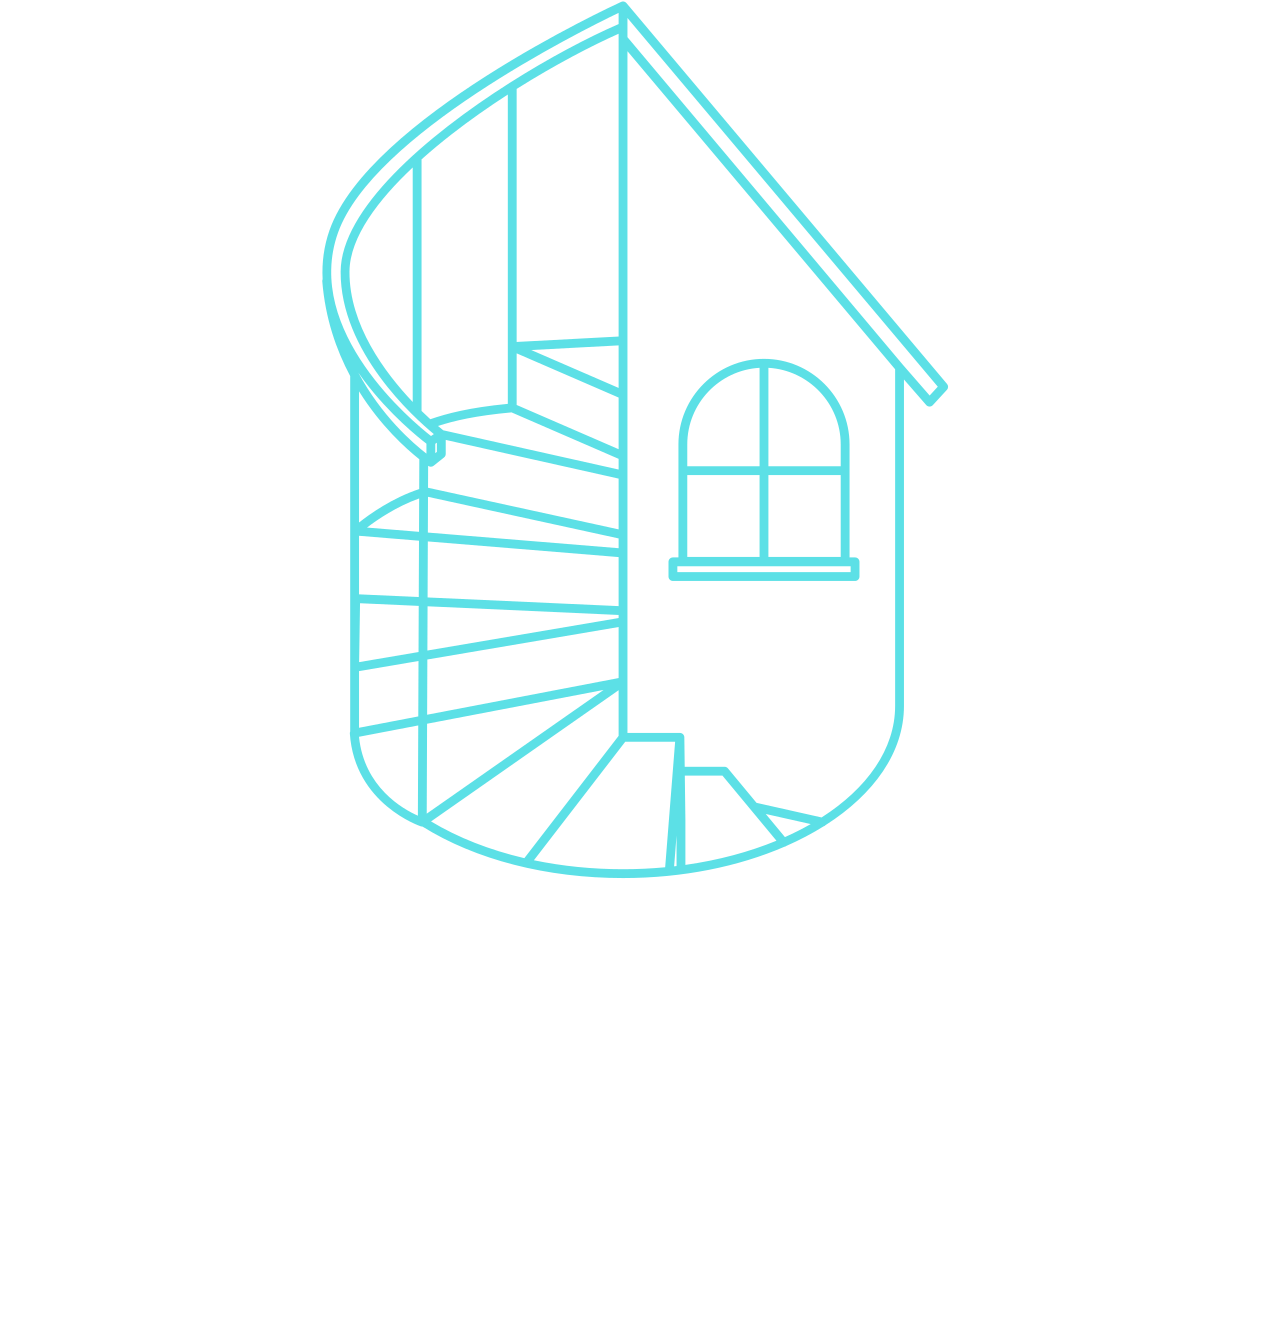 RAMARENO's logo